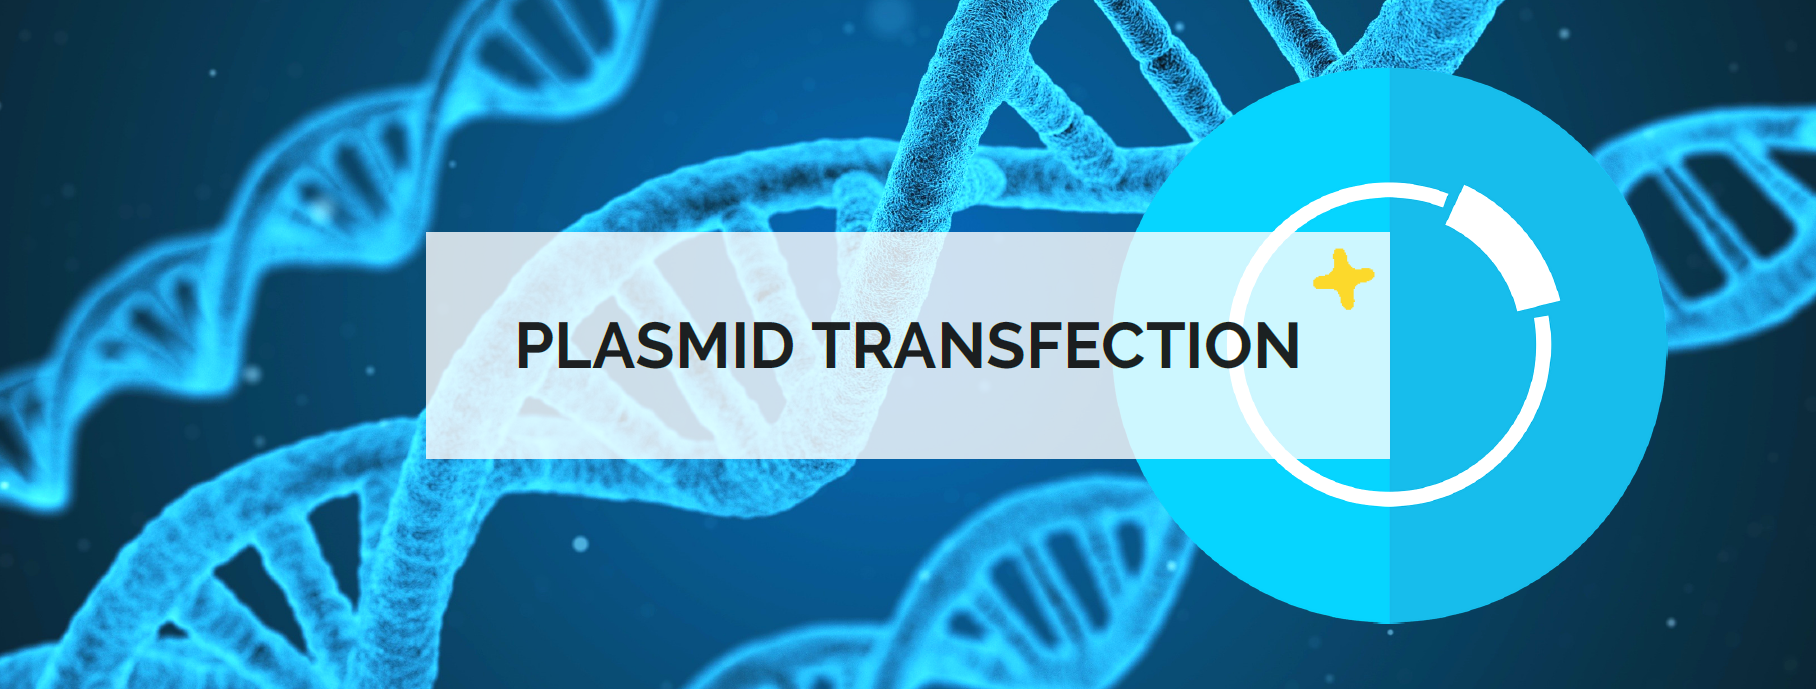 Plasmid transfection